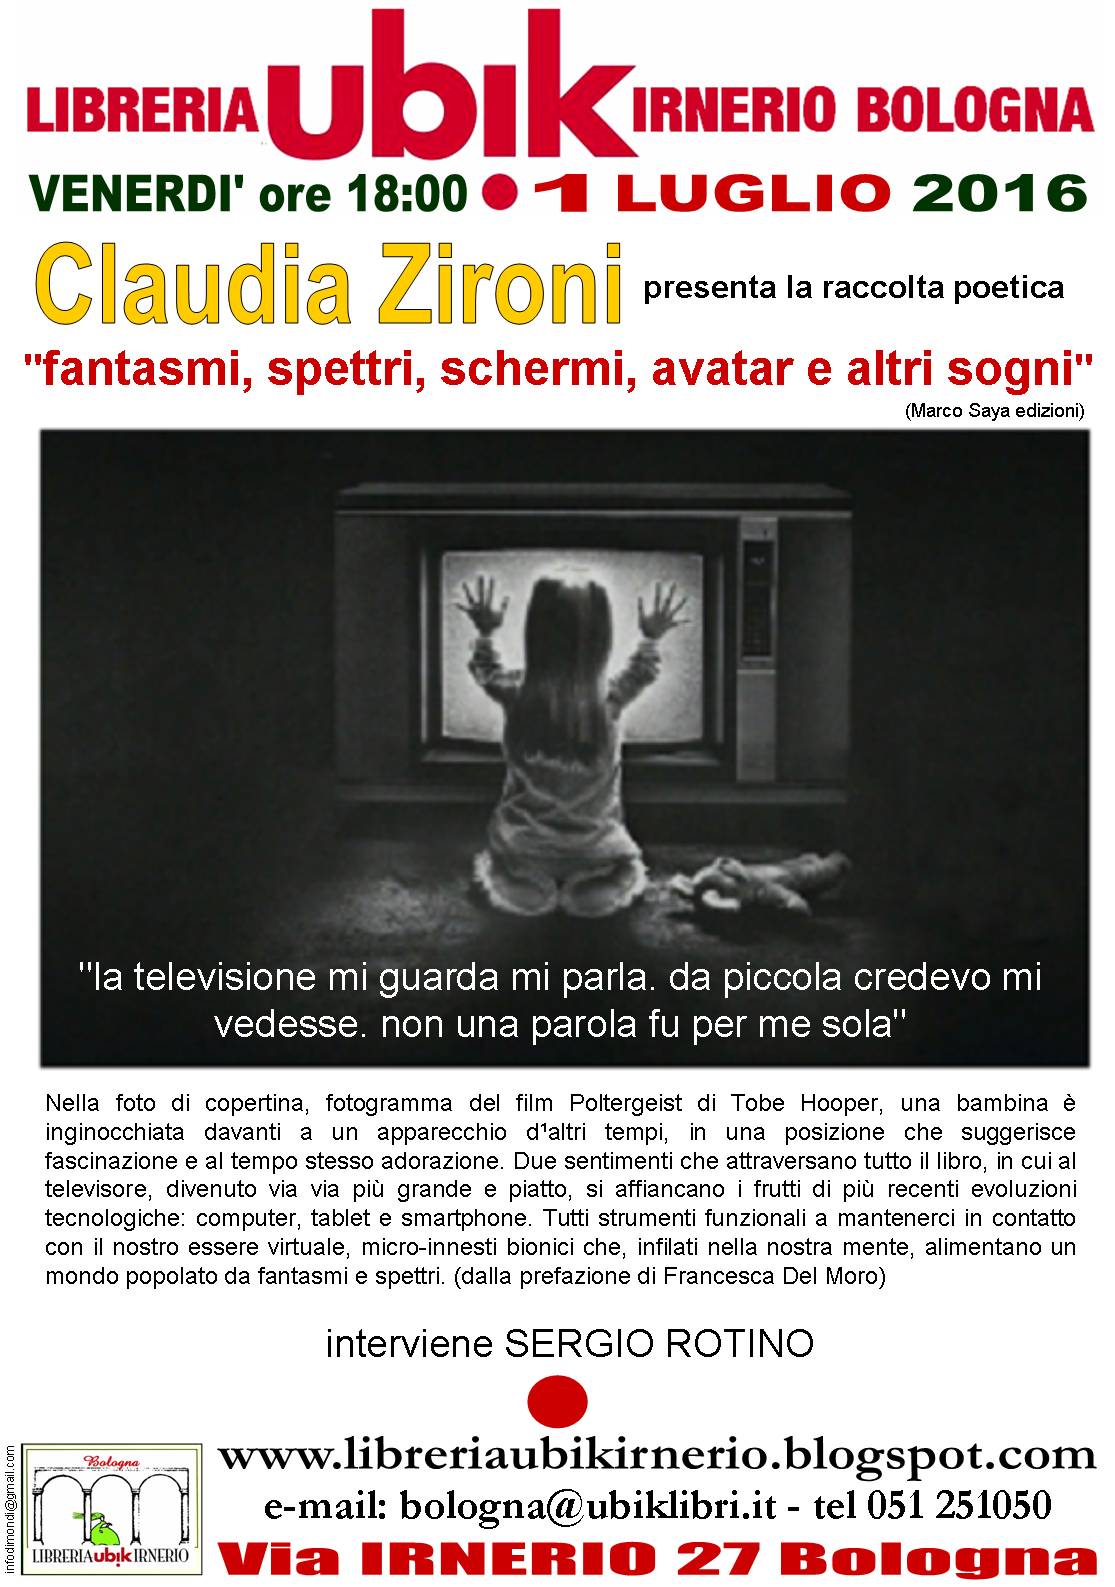 CLAUDIA ZIRONI0